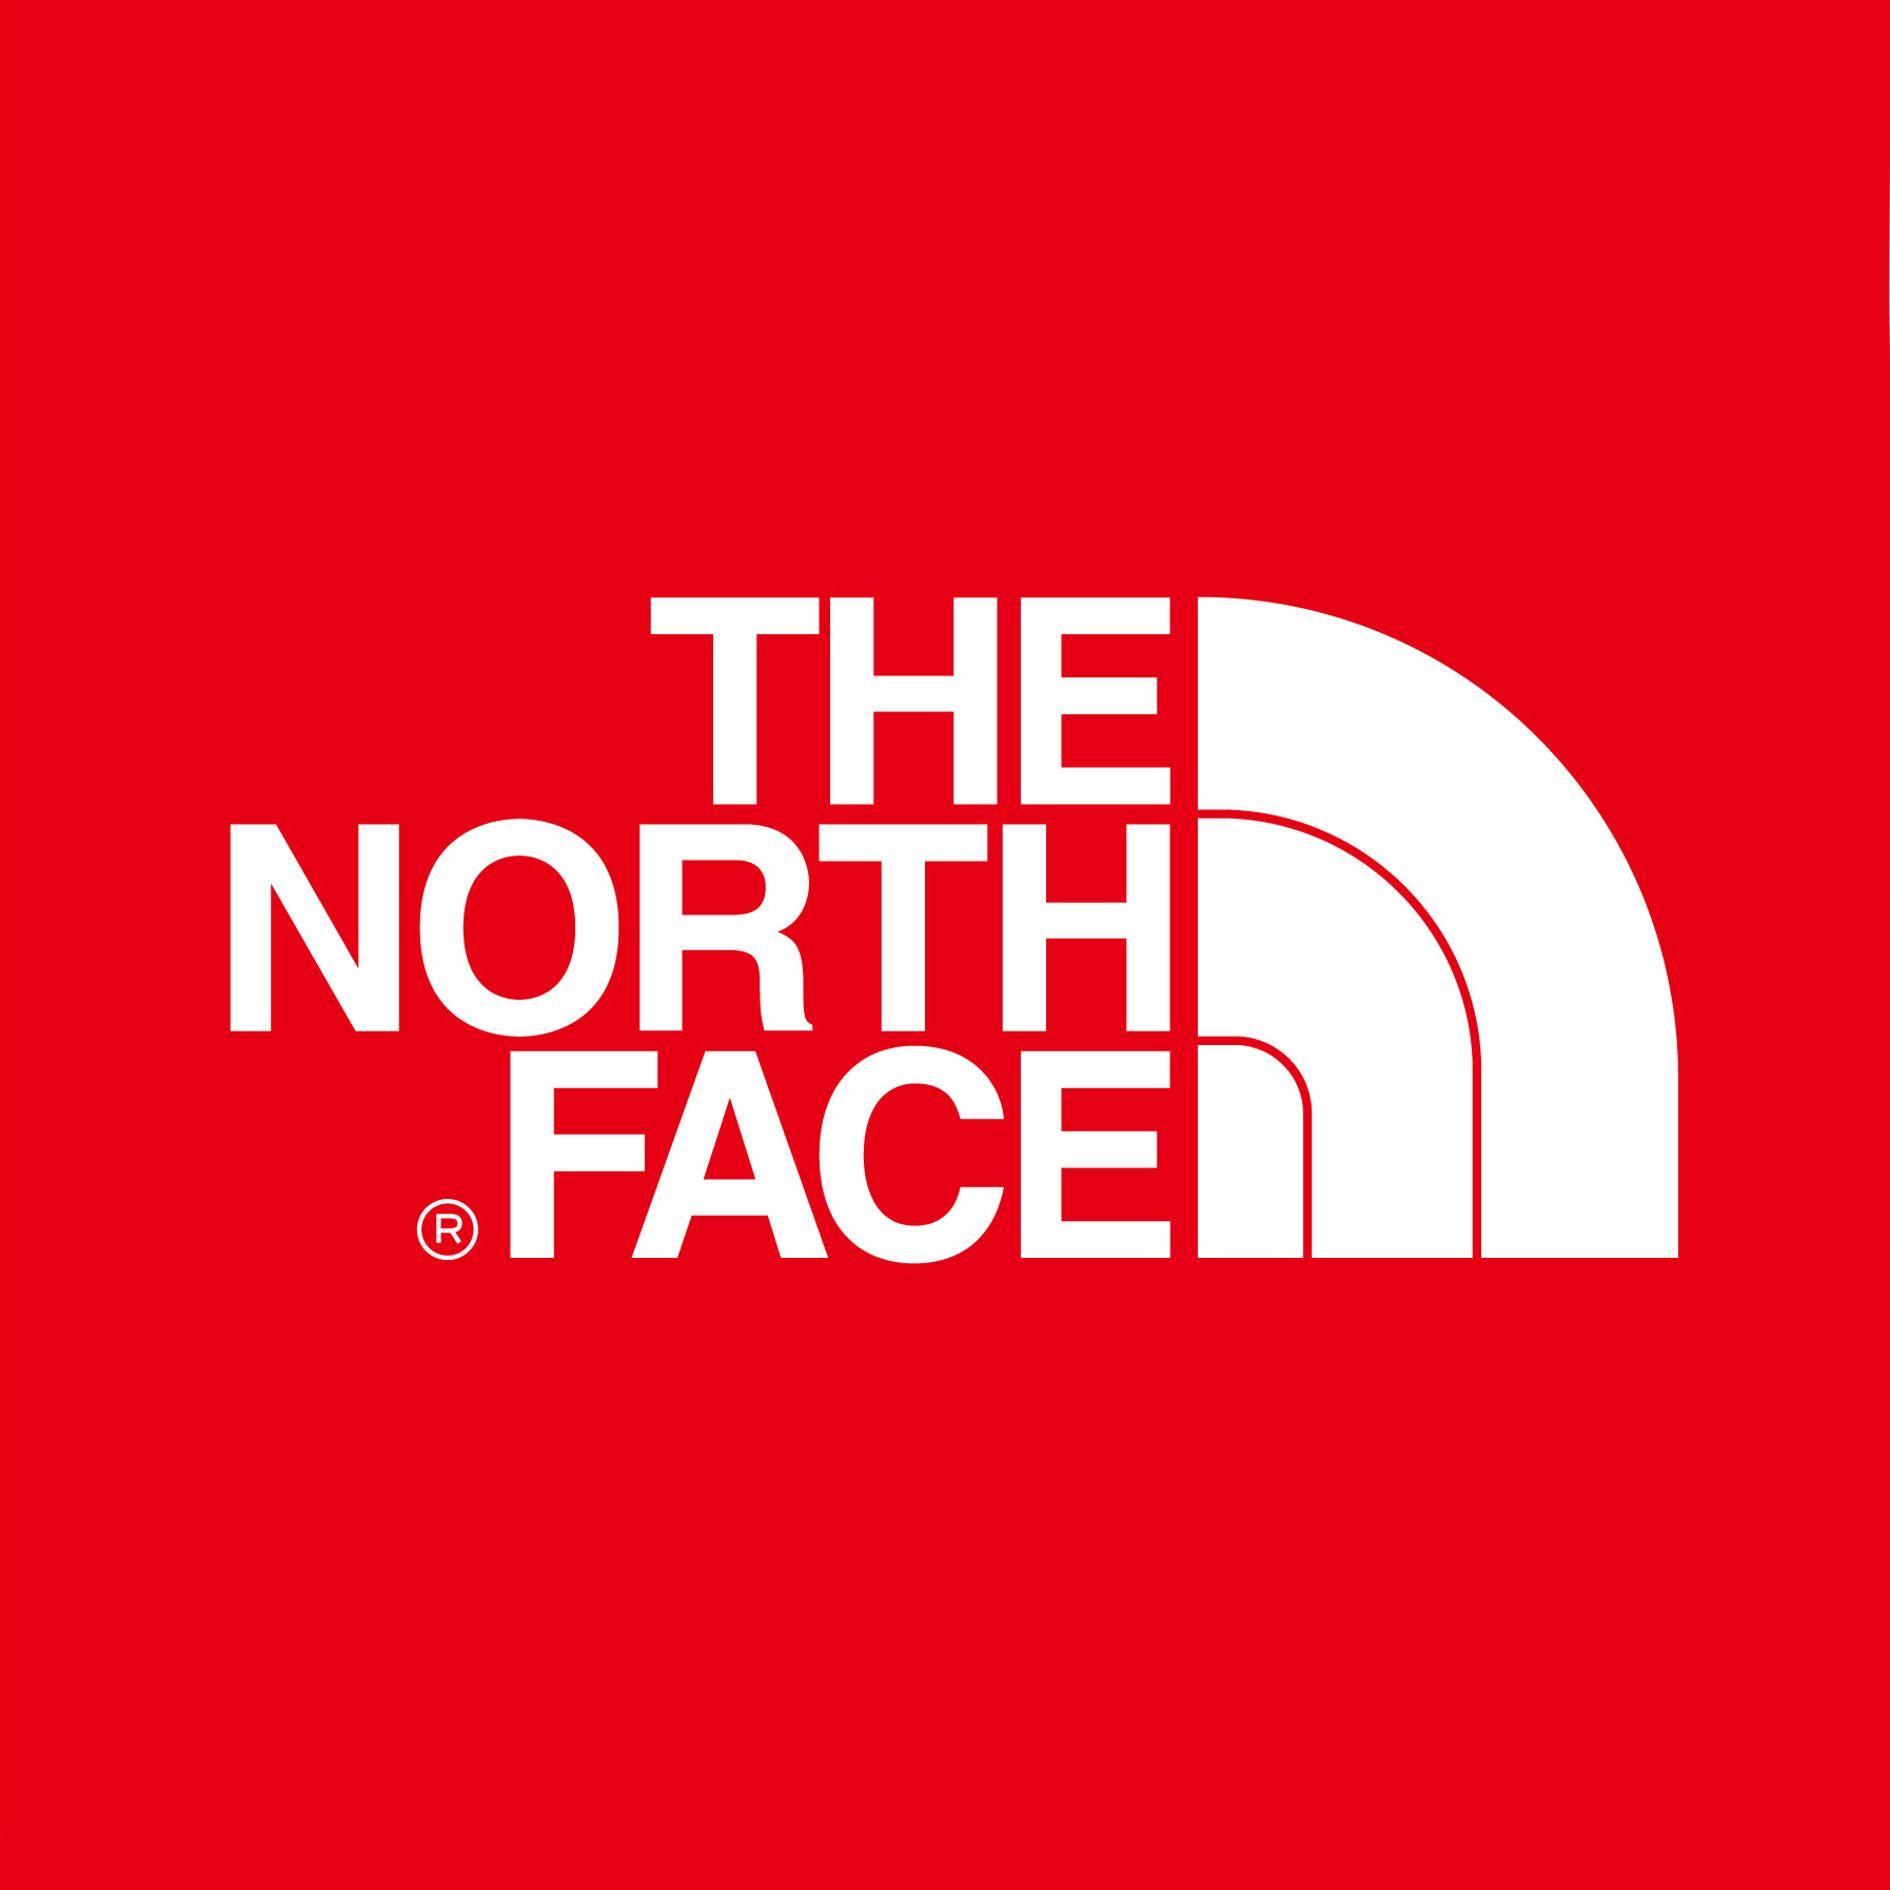 Red -Orange Square Logo - The North Face. The Great Original Stuff